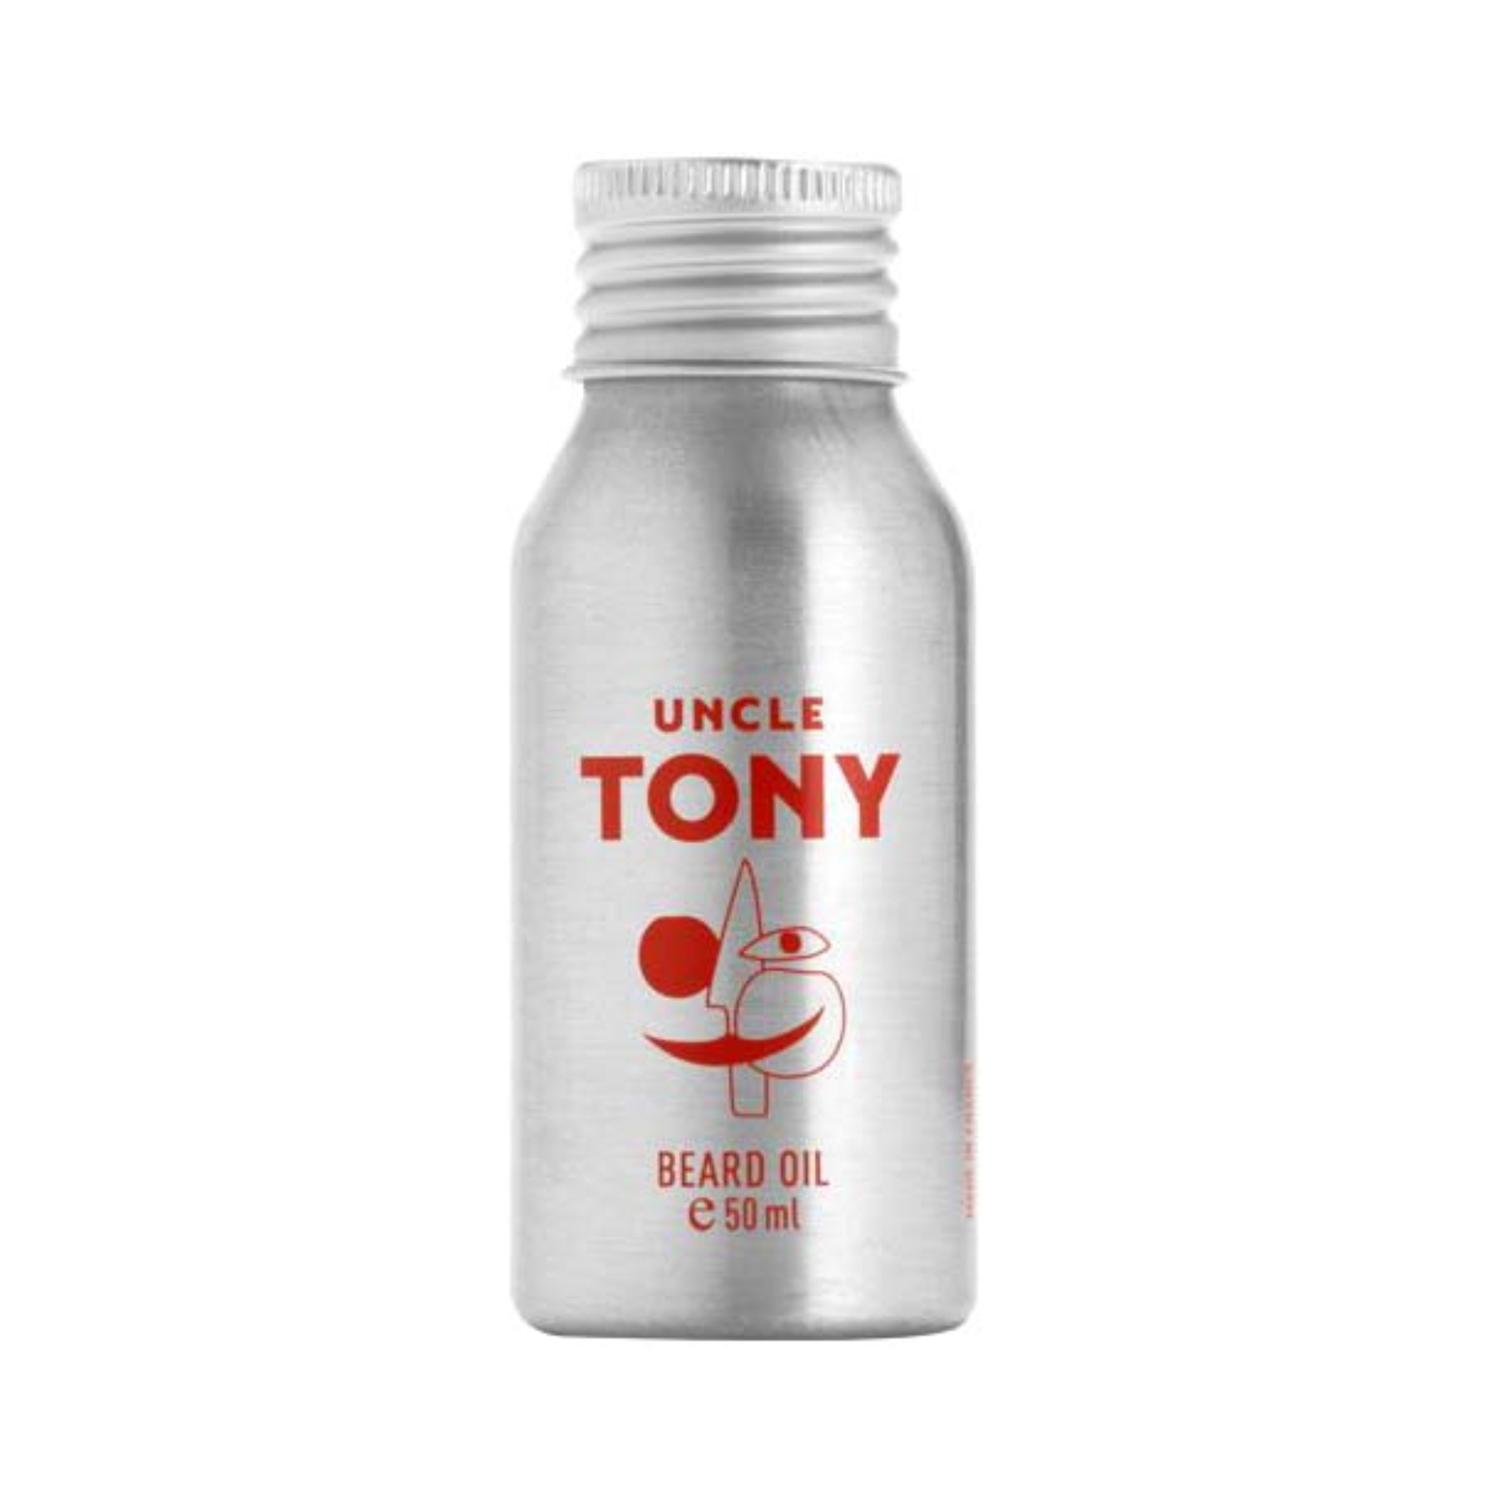 Uncle Tony Beard Oil (50ml)